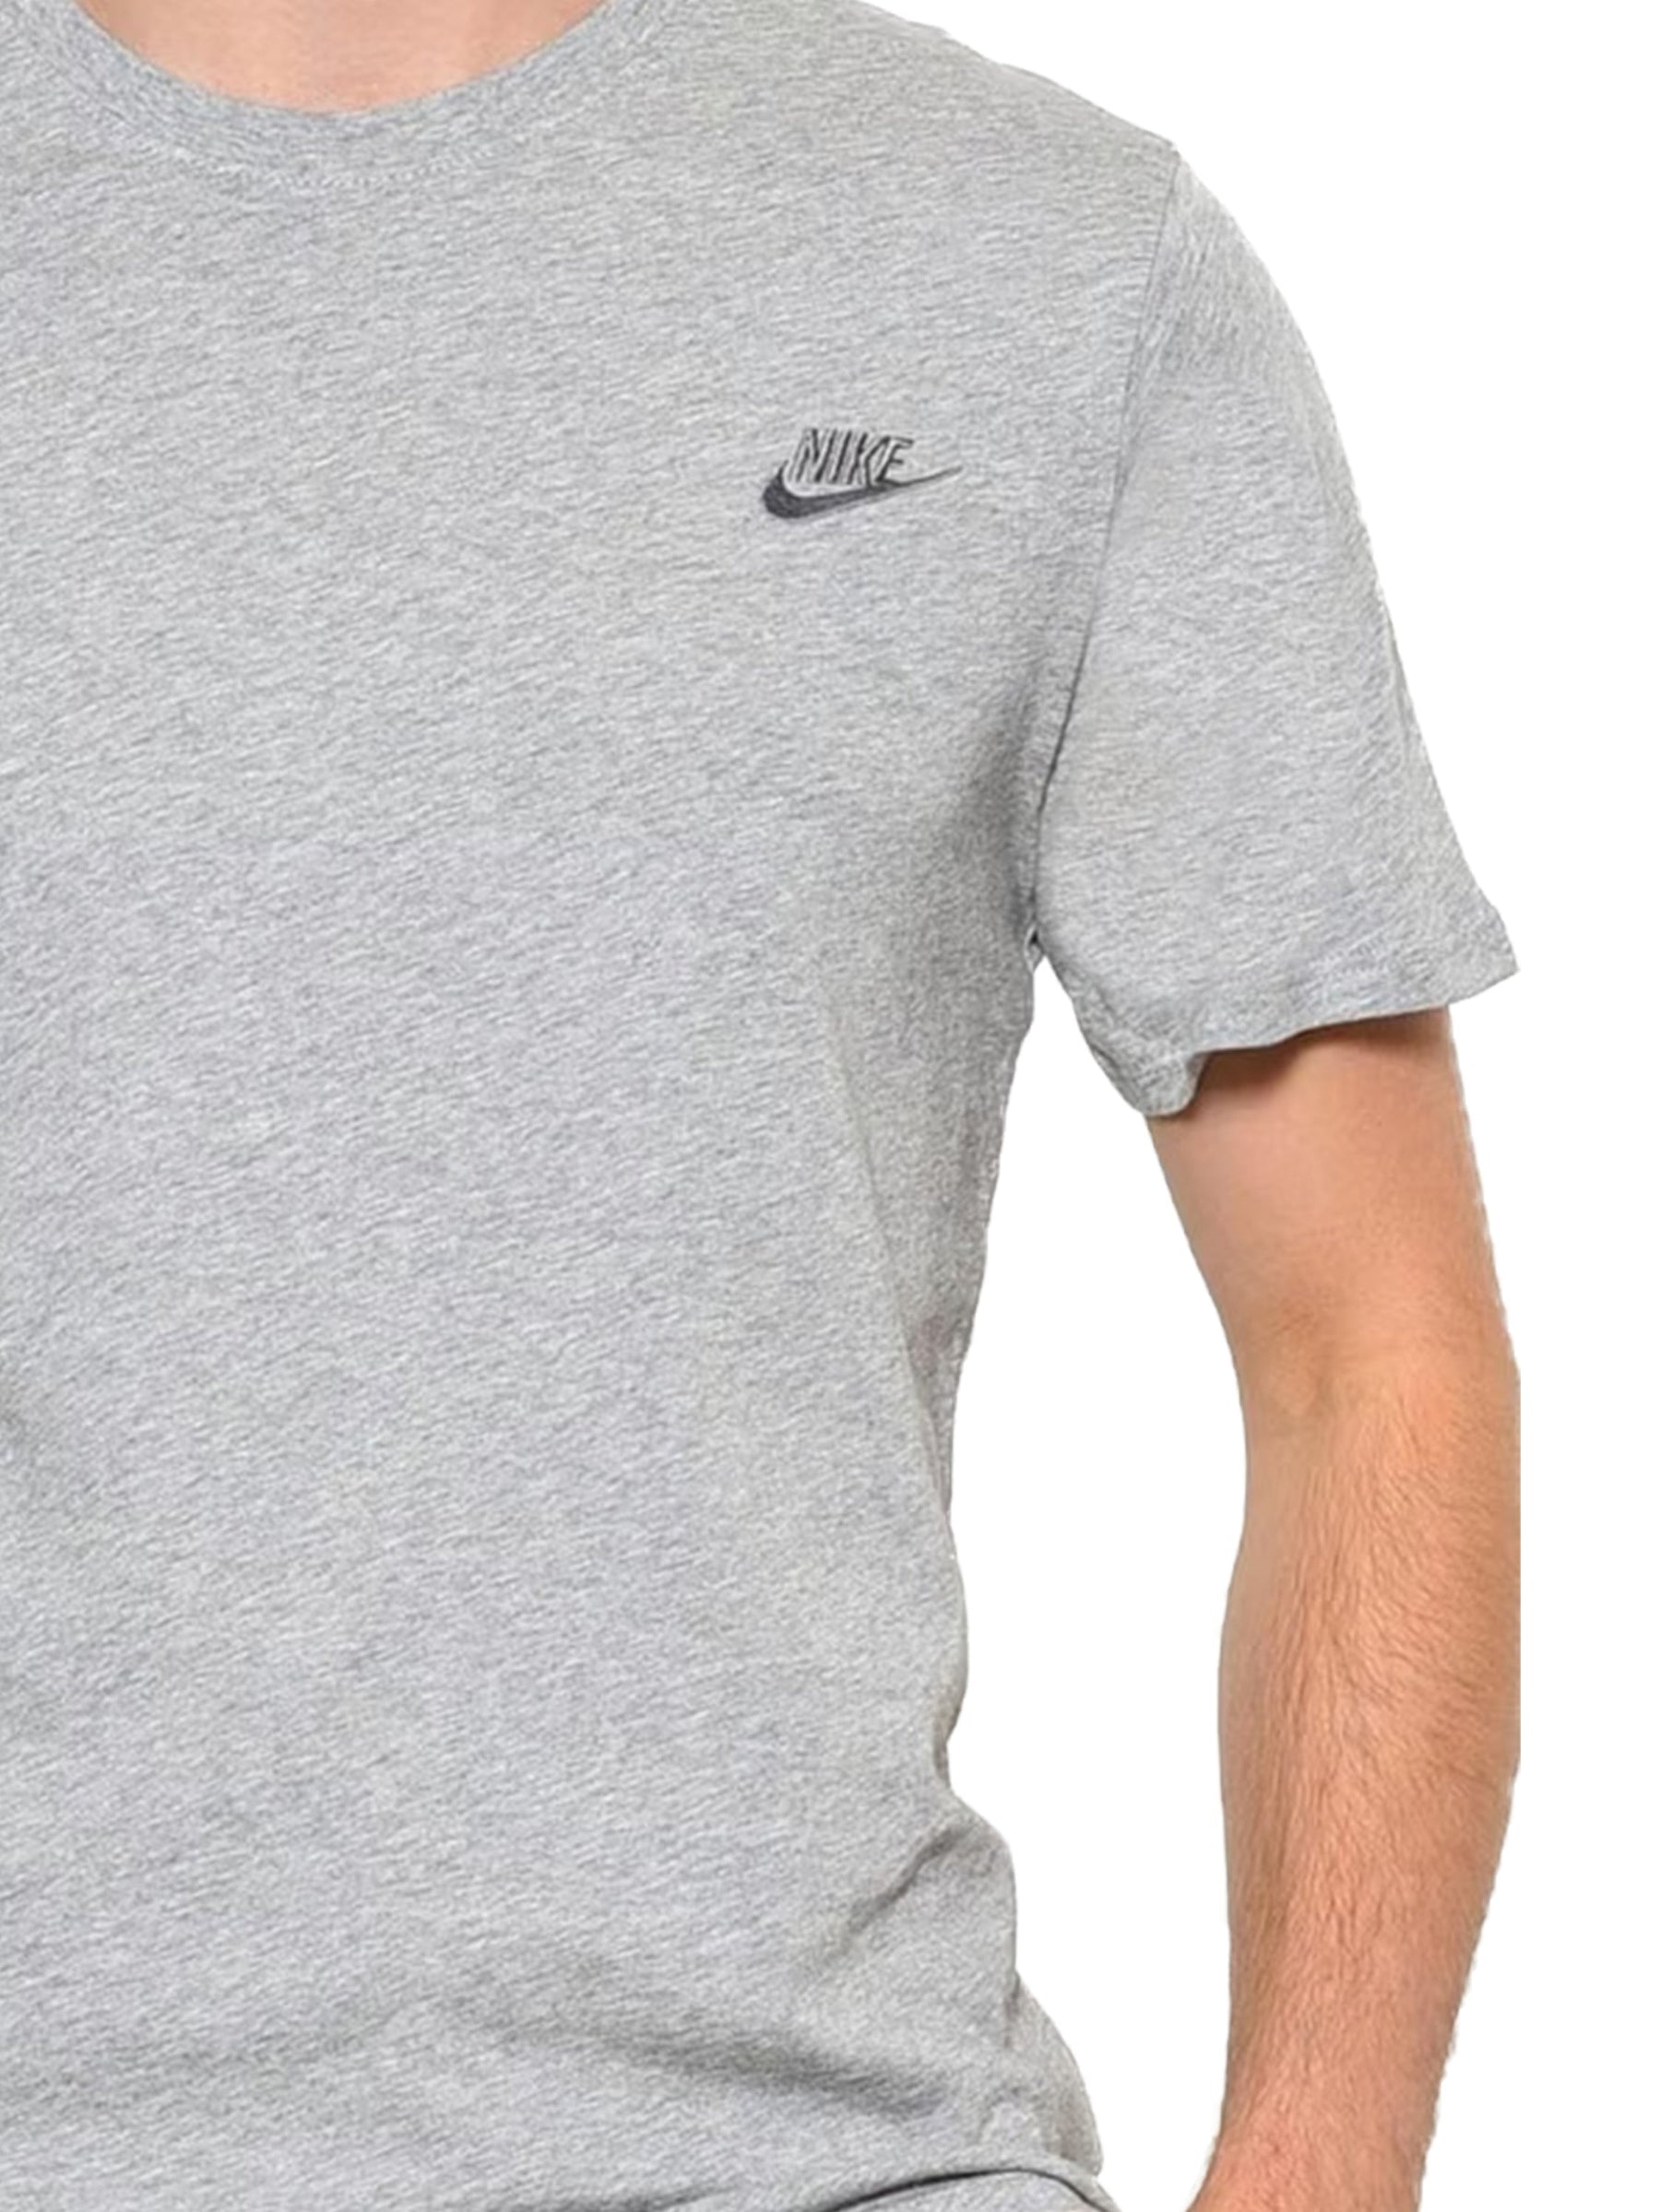 NIKE_TST_827021 Copy of Nike Sportswear Club Mens T-Shirt NIKE RAWDENIM